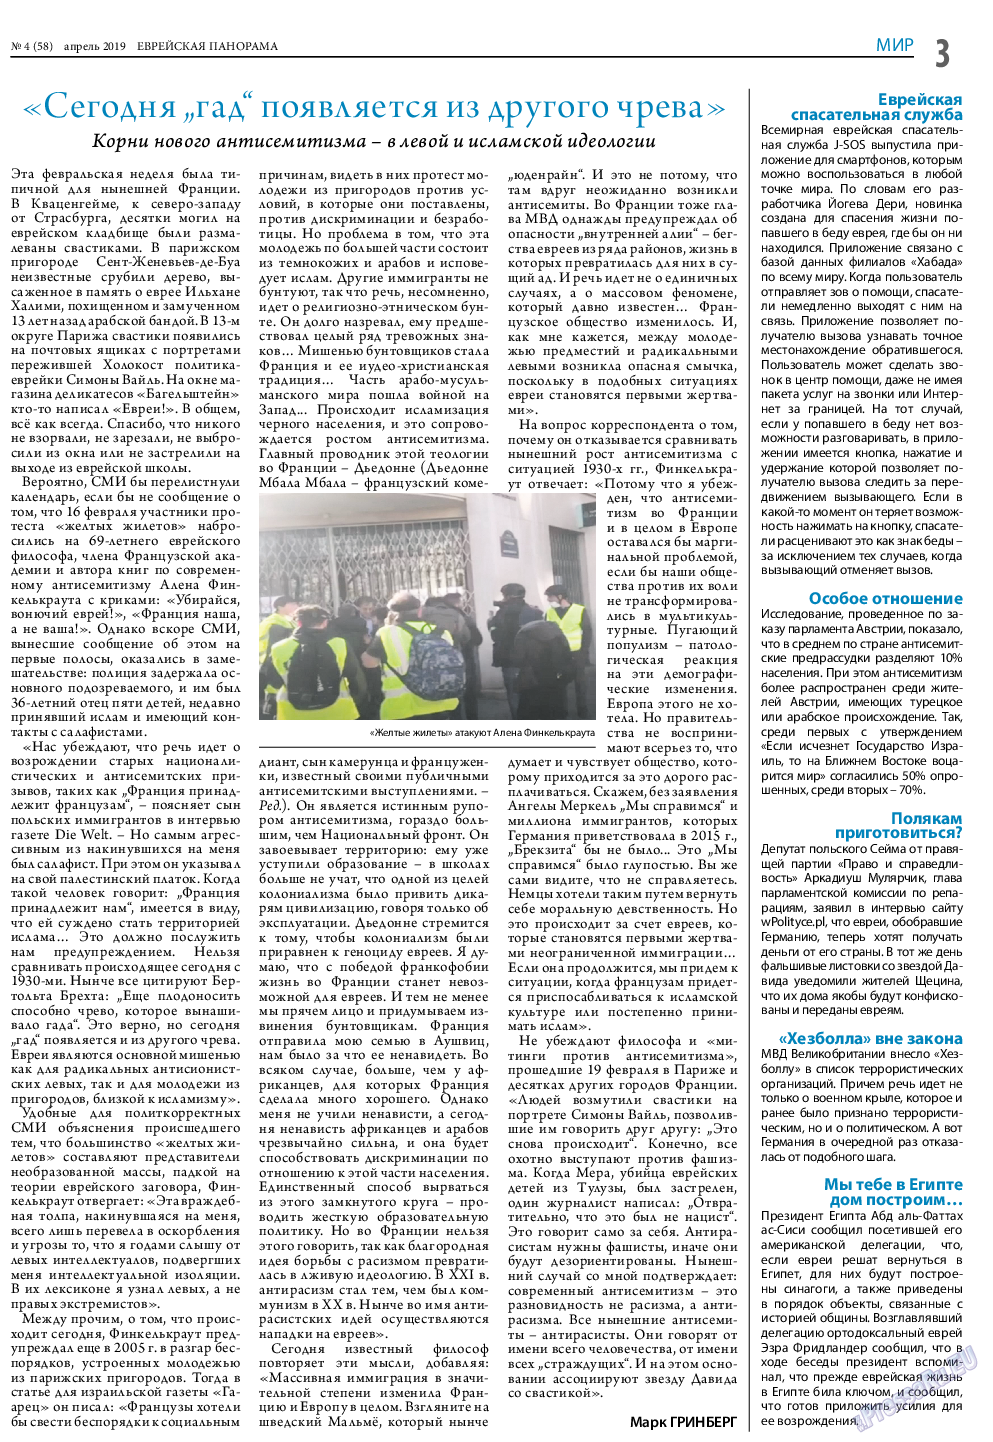 Еврейская панорама, газета. 2019 №4 стр.3